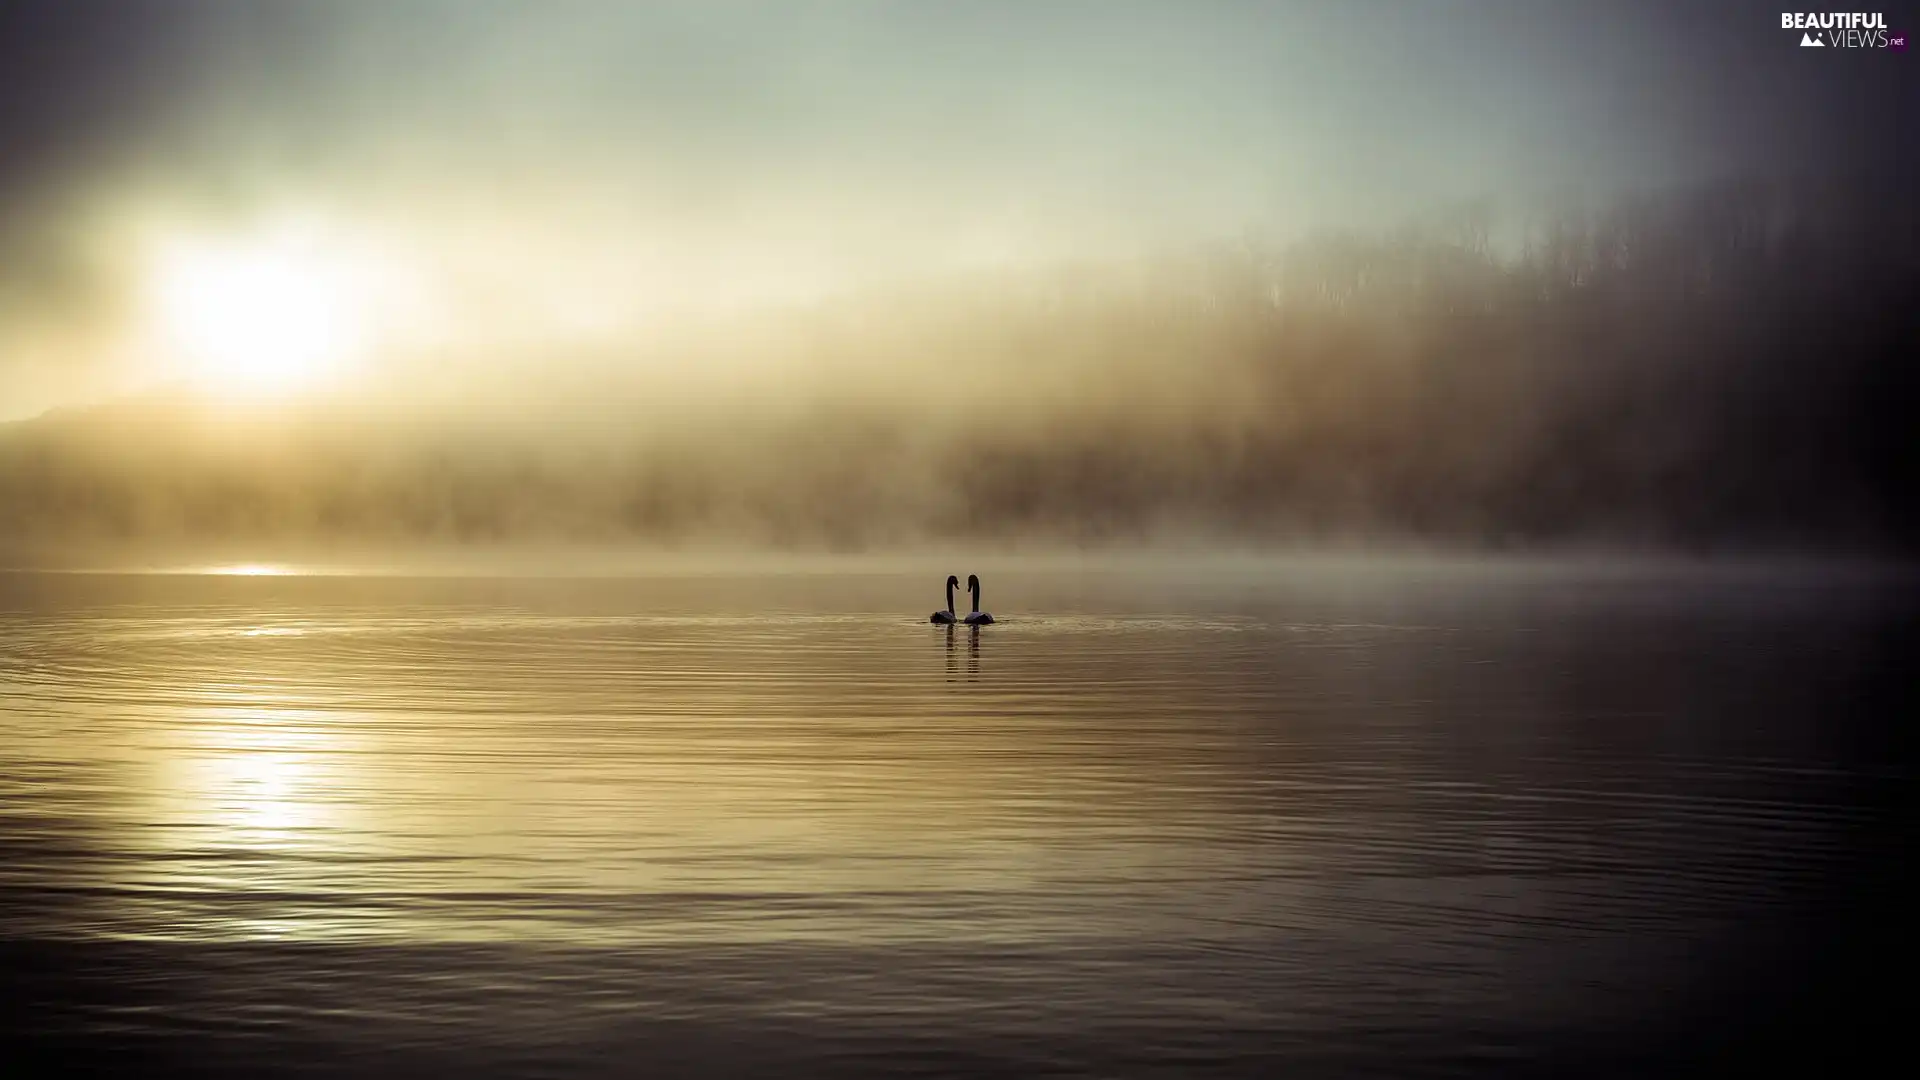 Two Swans, lake, Fog